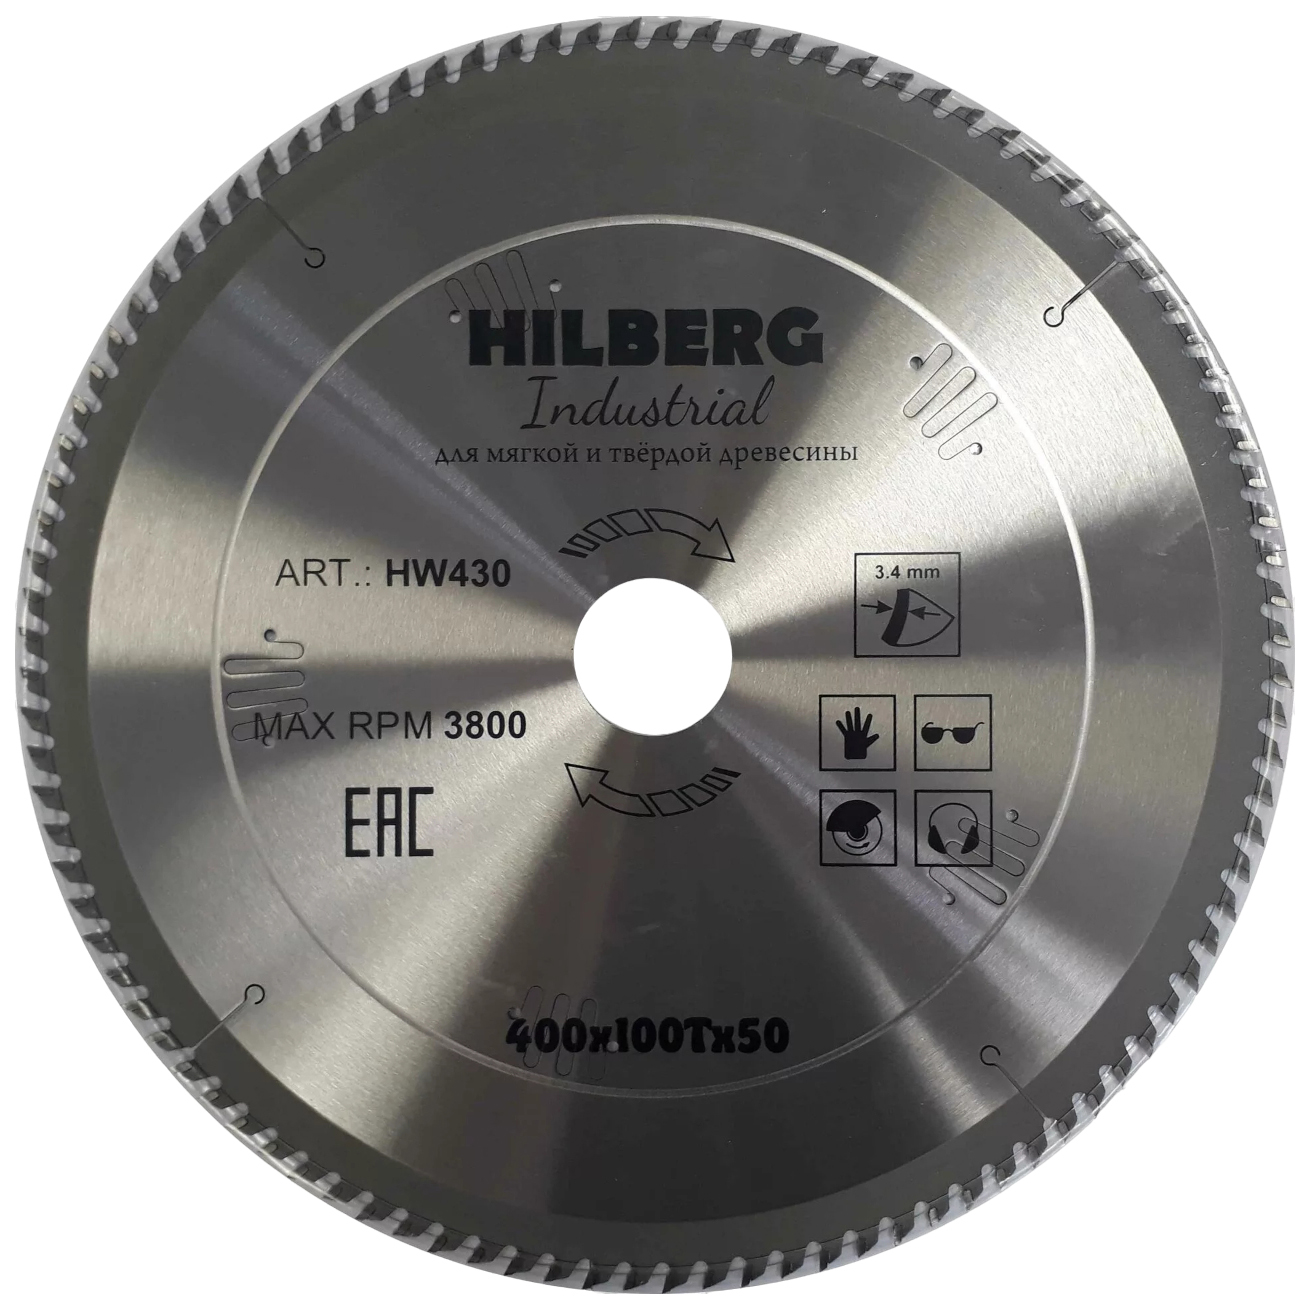 фото Hilberg диск пильный hilberg industrial дерево 400*50*100т hw430